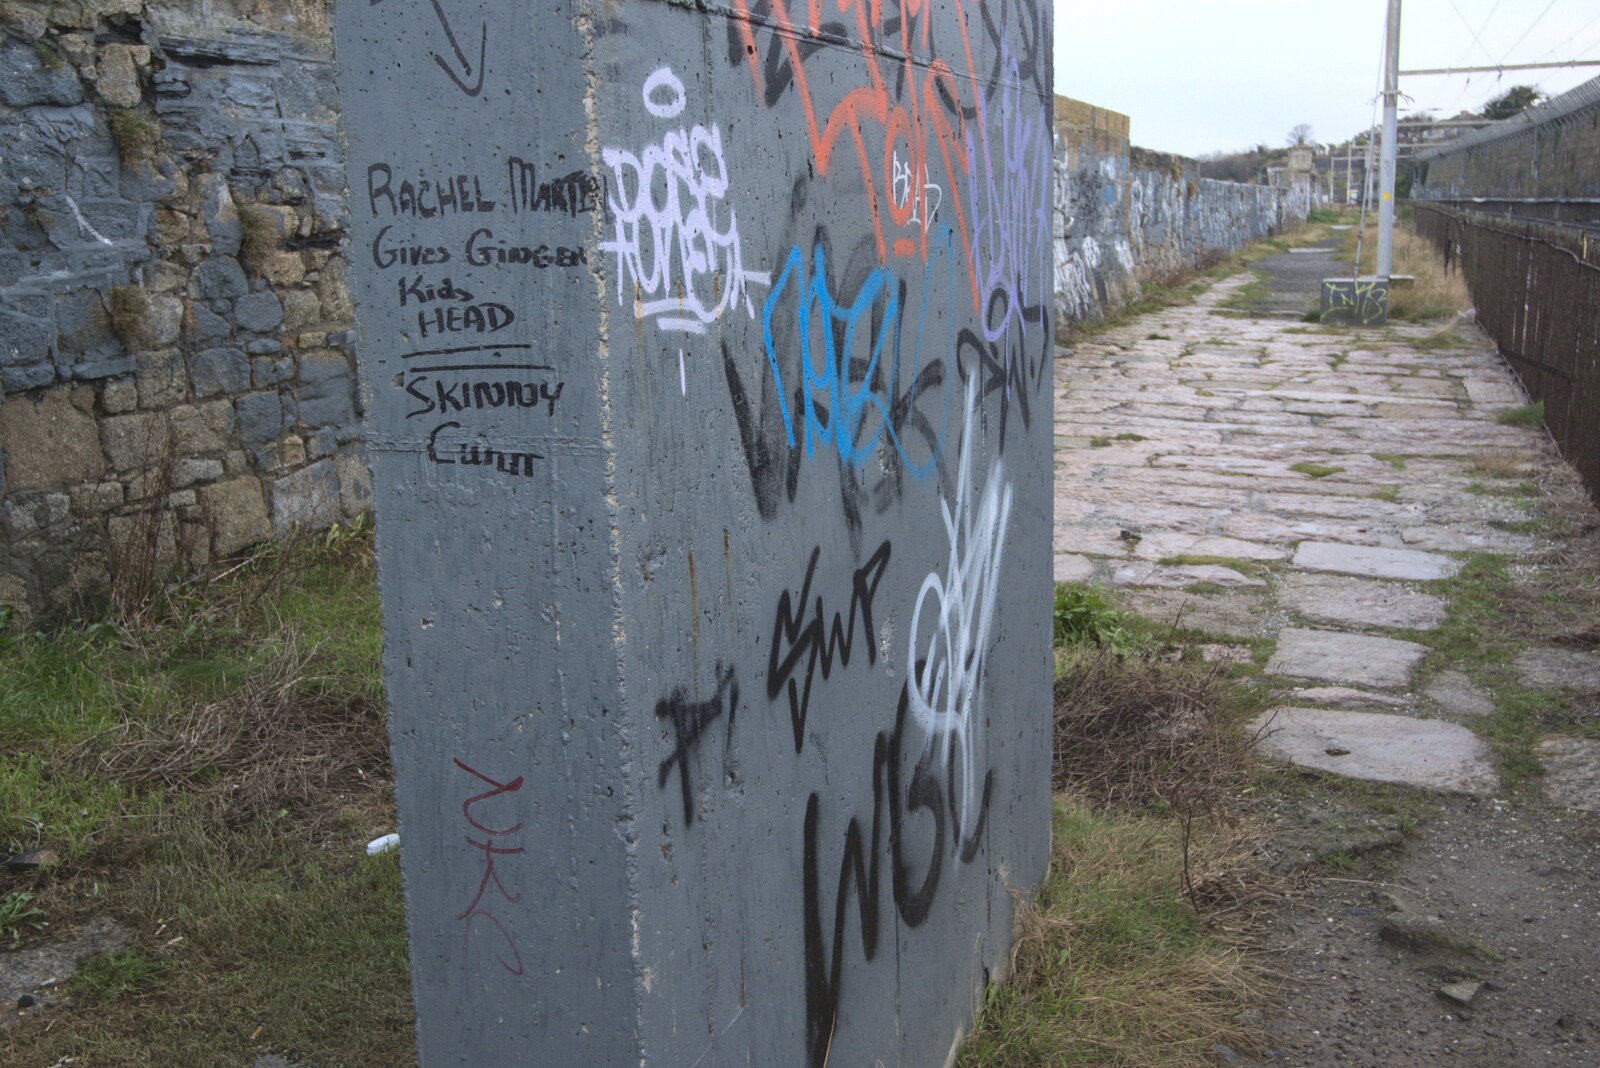 Graffiti on a concrete block from Monkstown Graffiti and Dereliction, County Dublin, Ireland - 26th December 2009